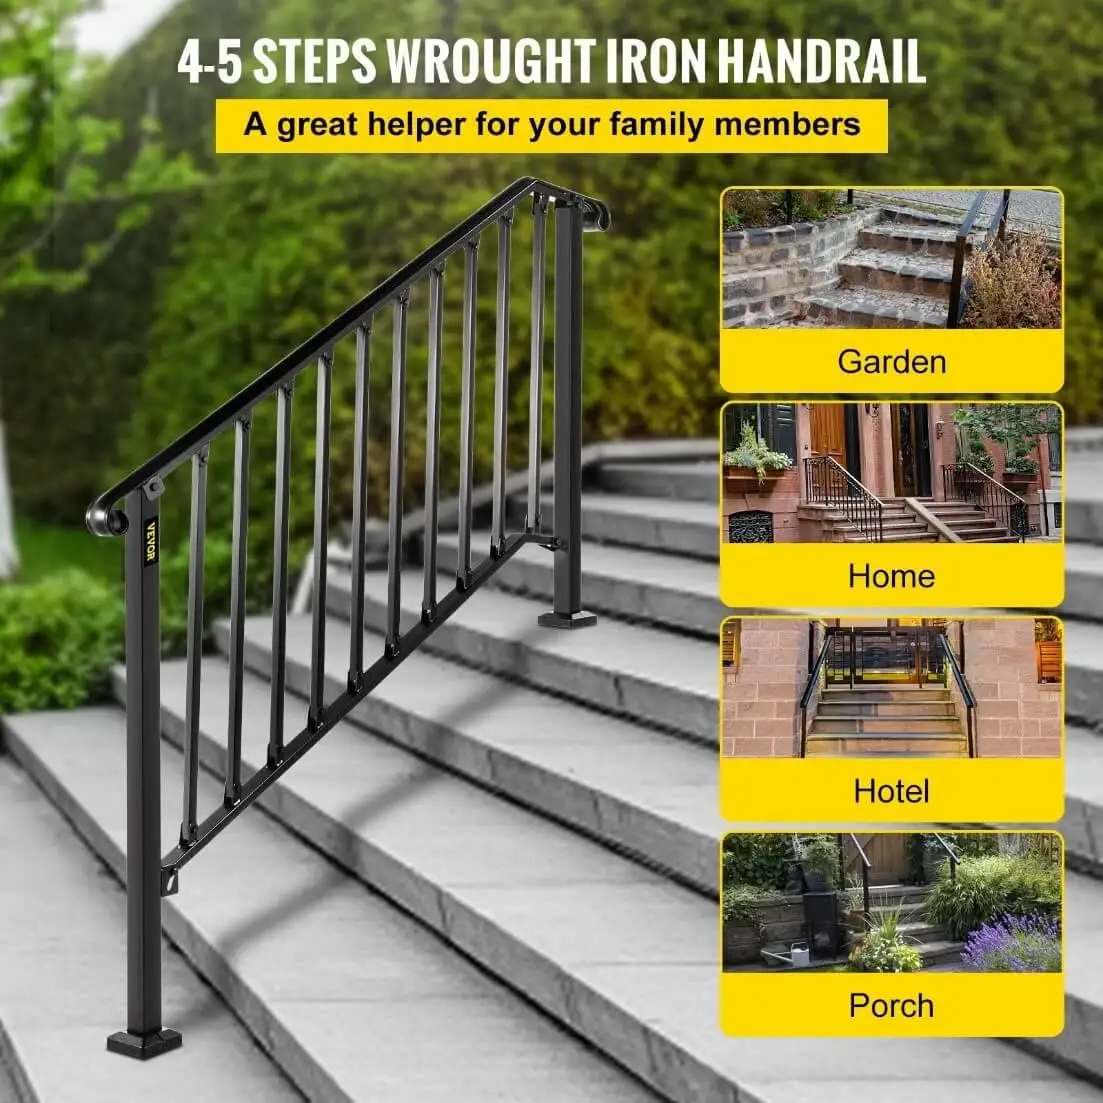 Iron handrail